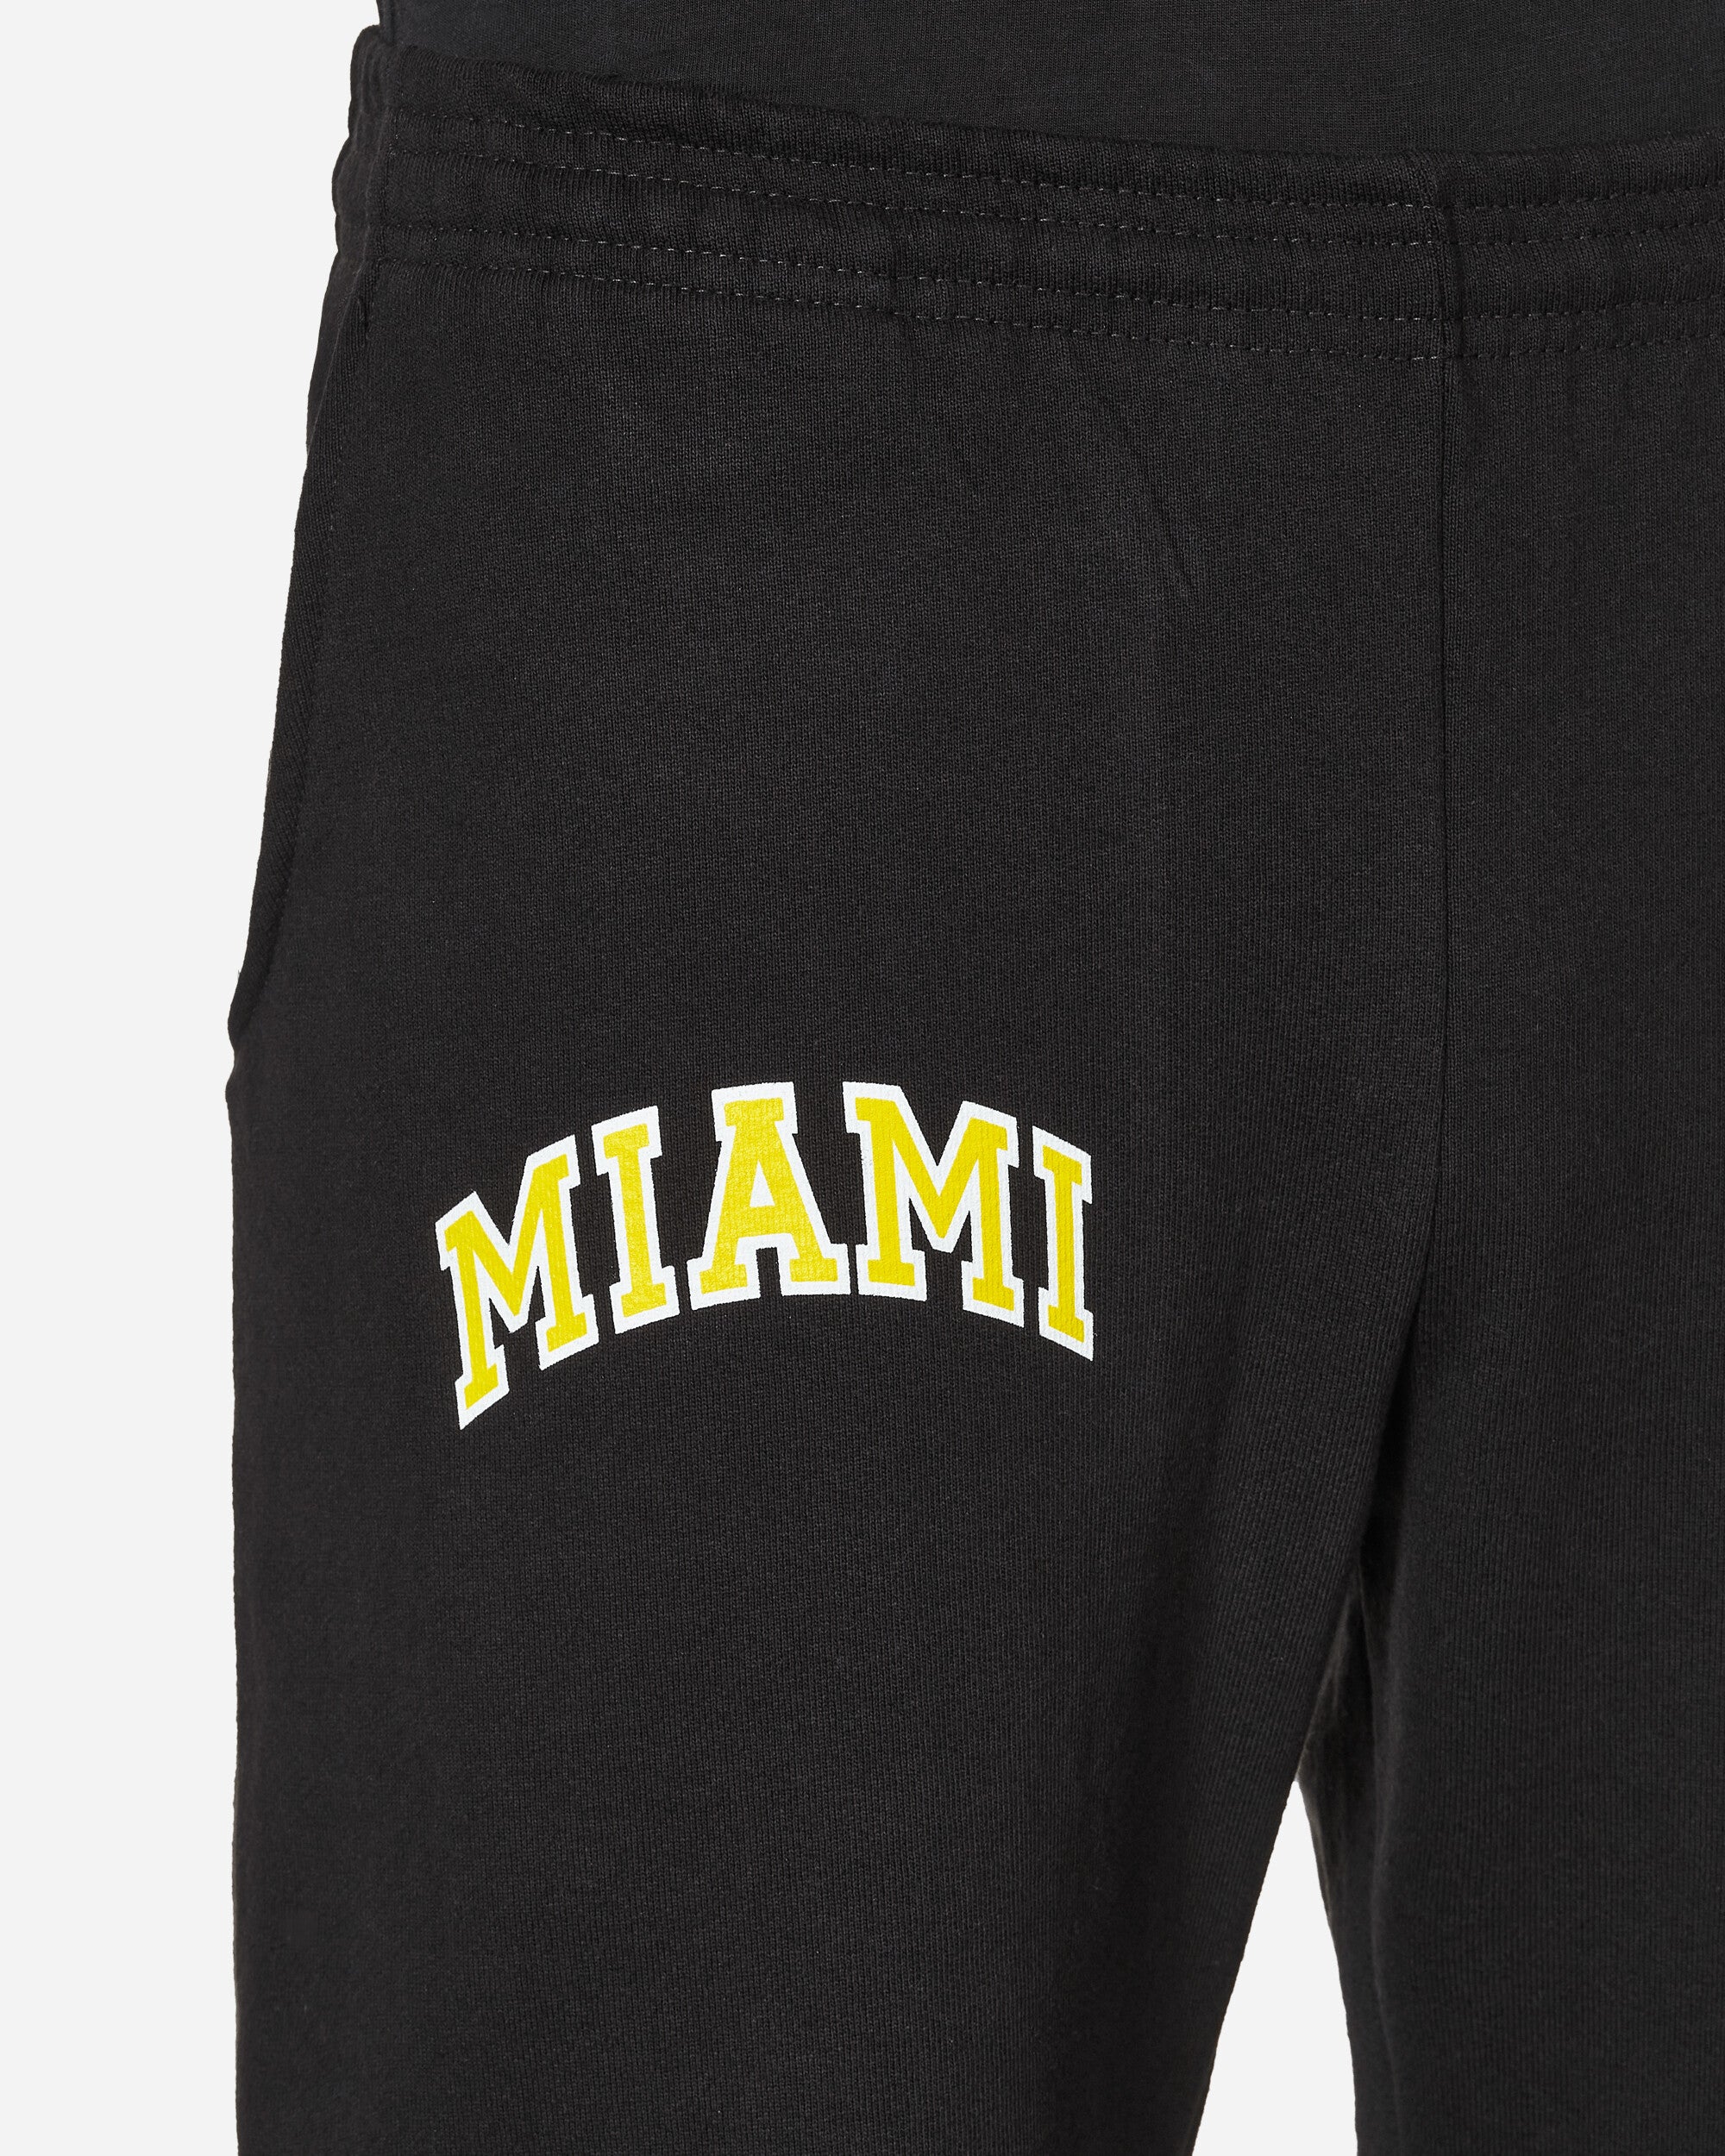 Stray Rats Miami Sweats Black Pants Sweatpants SRP1145 1